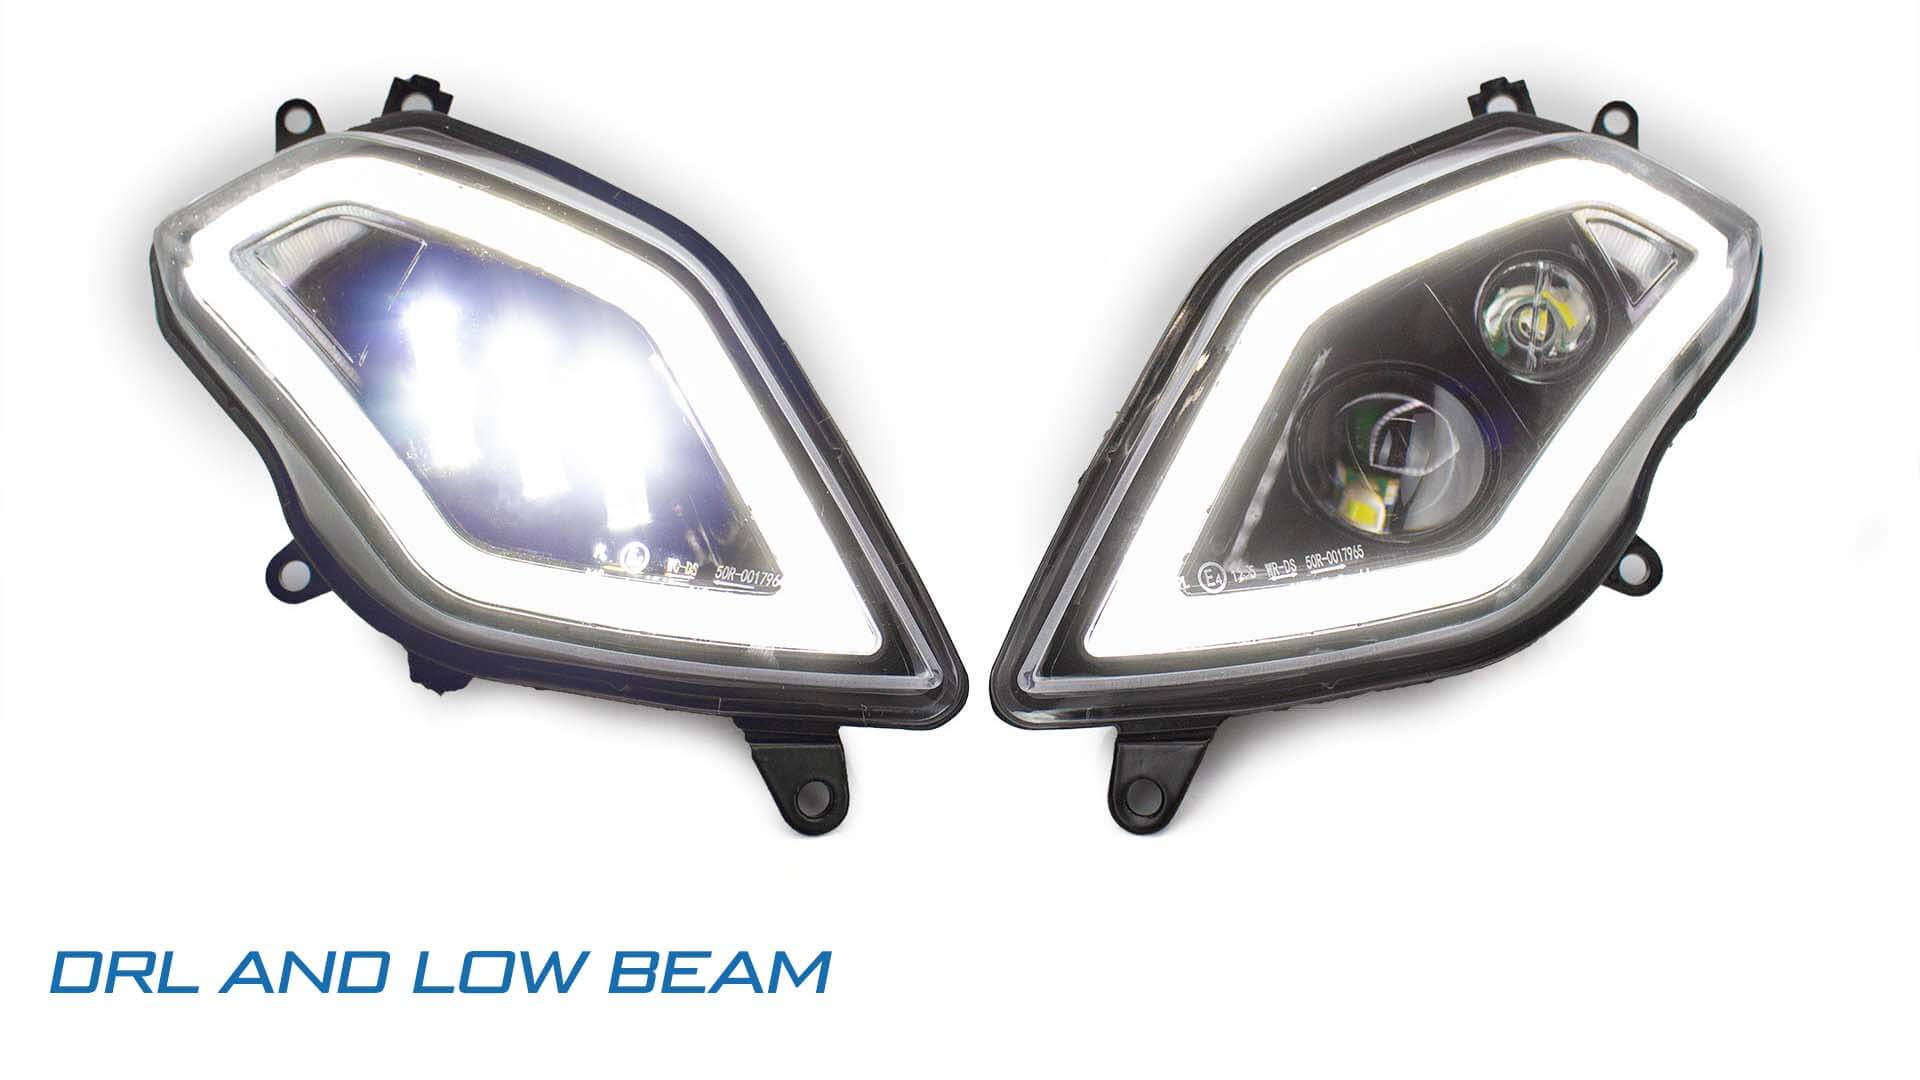 Bi-LED headlight for BMW S1000XR LED Headlights